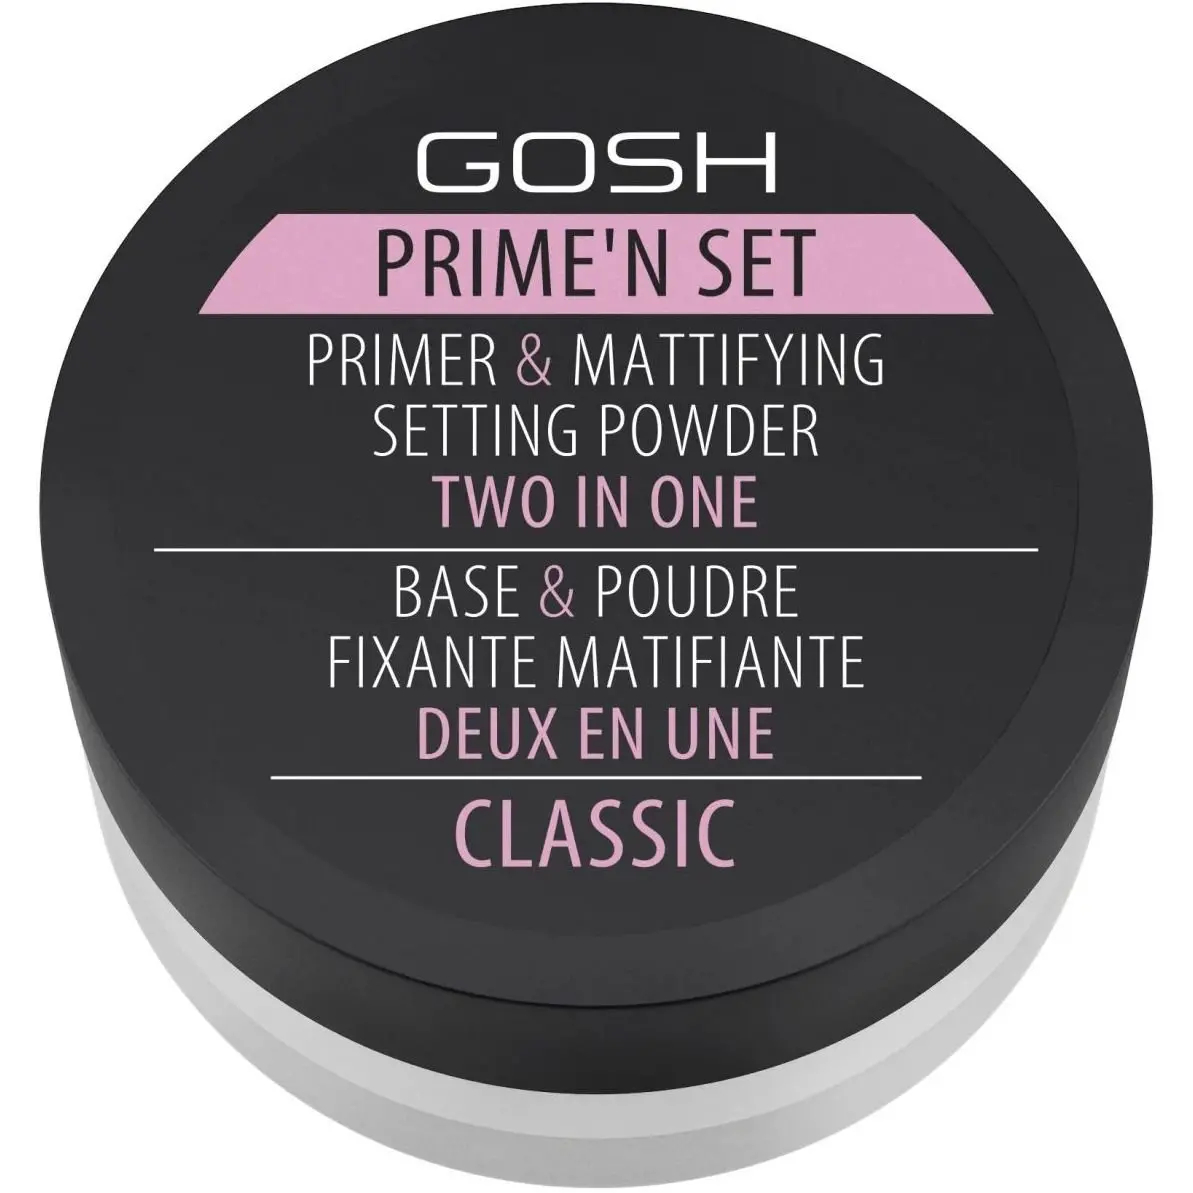 Основа під макіяж пудрова Gosh Prime'n Set Primer & Mattifying Setting Powder 2 in 1 розсипчаста, 001 Classic, 7 г - фото 1